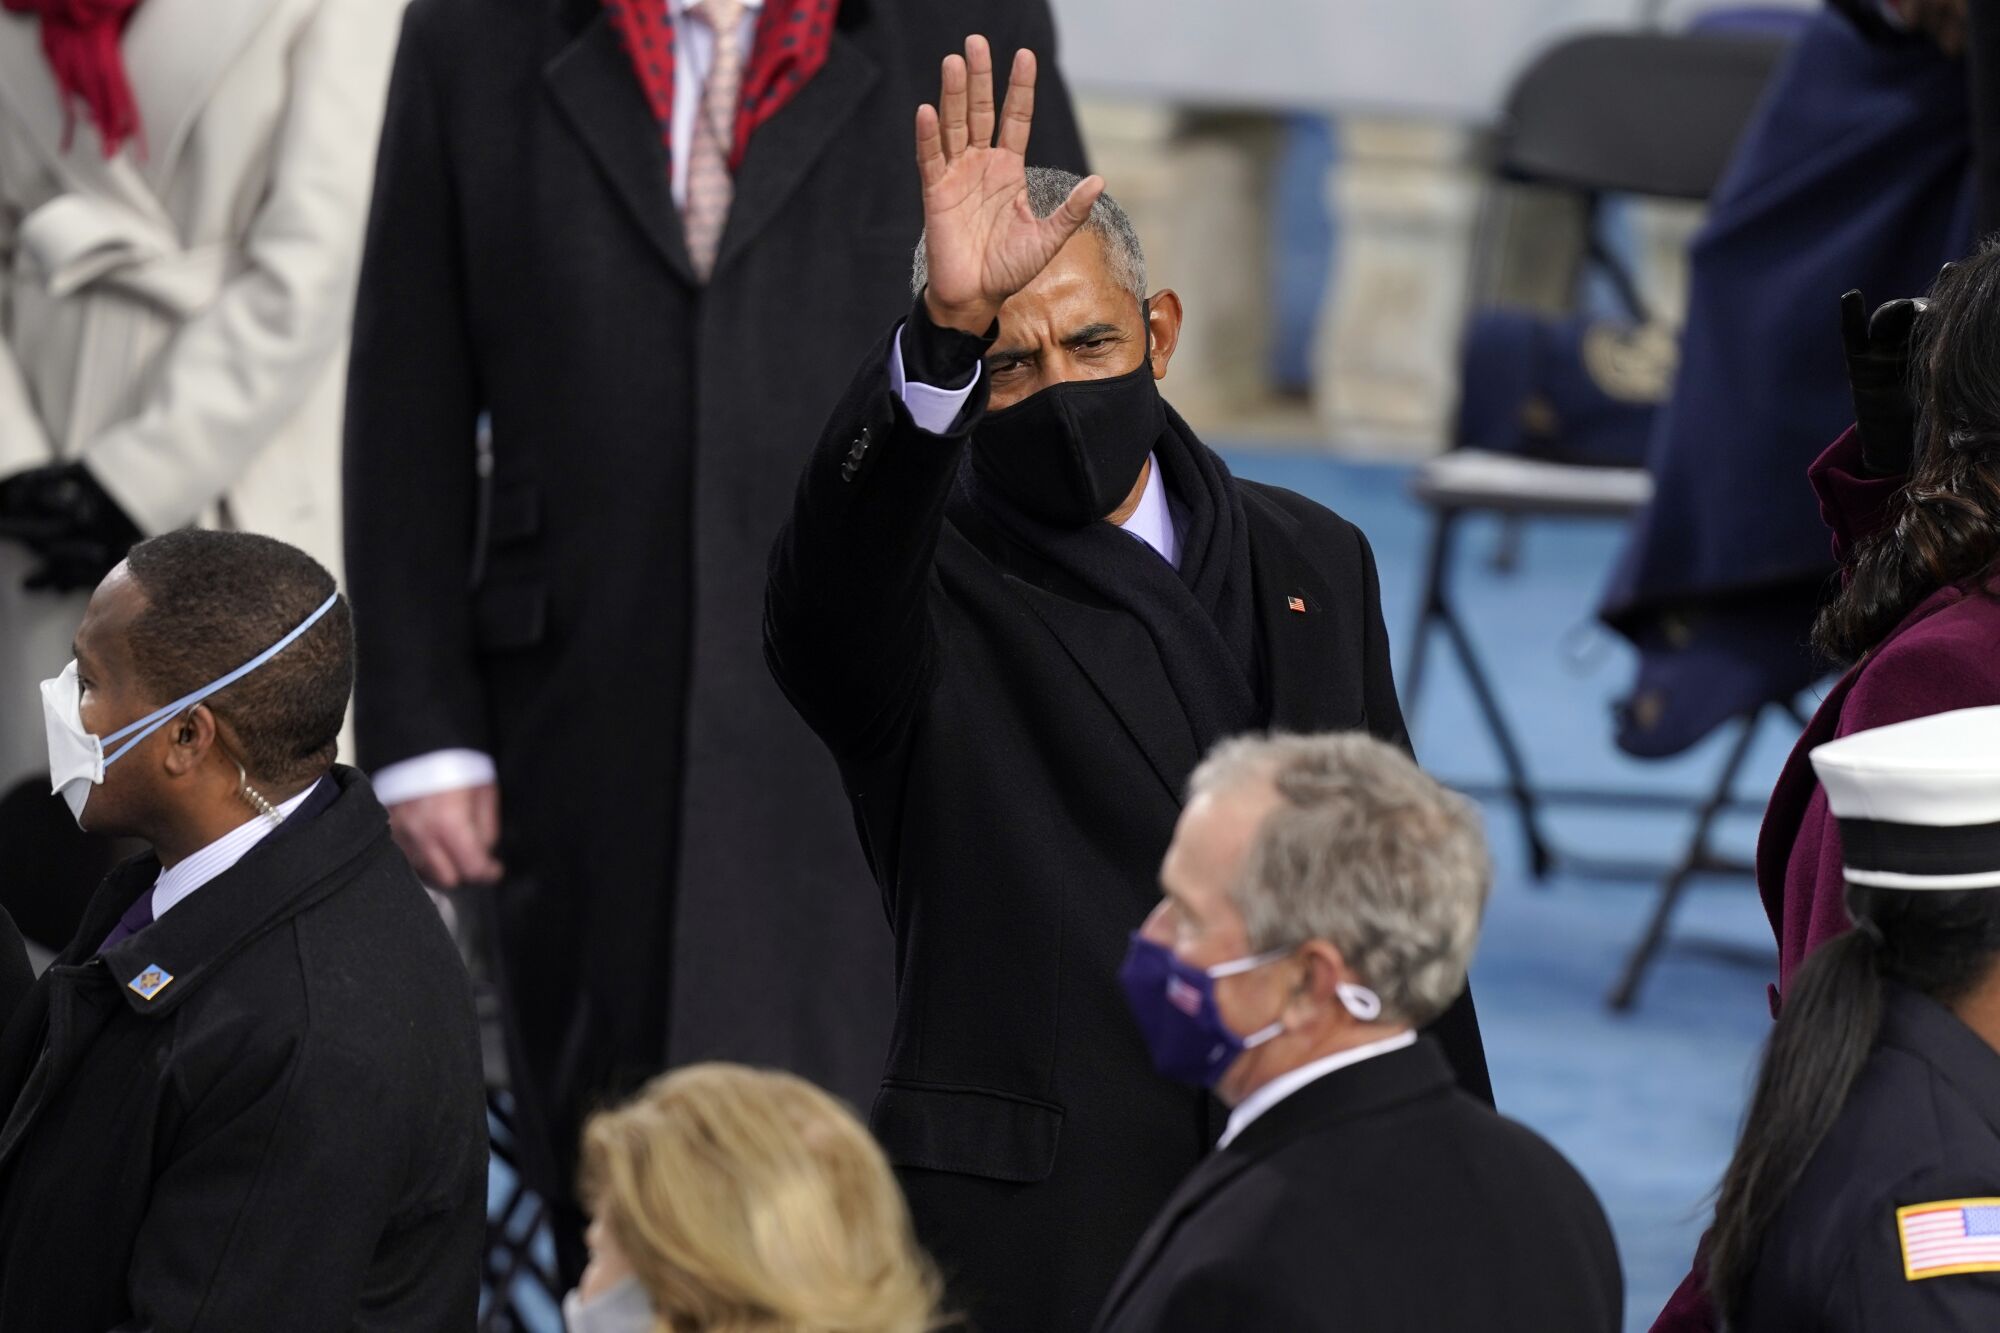 Former President Obama arrives at the inauguration of President Biden.